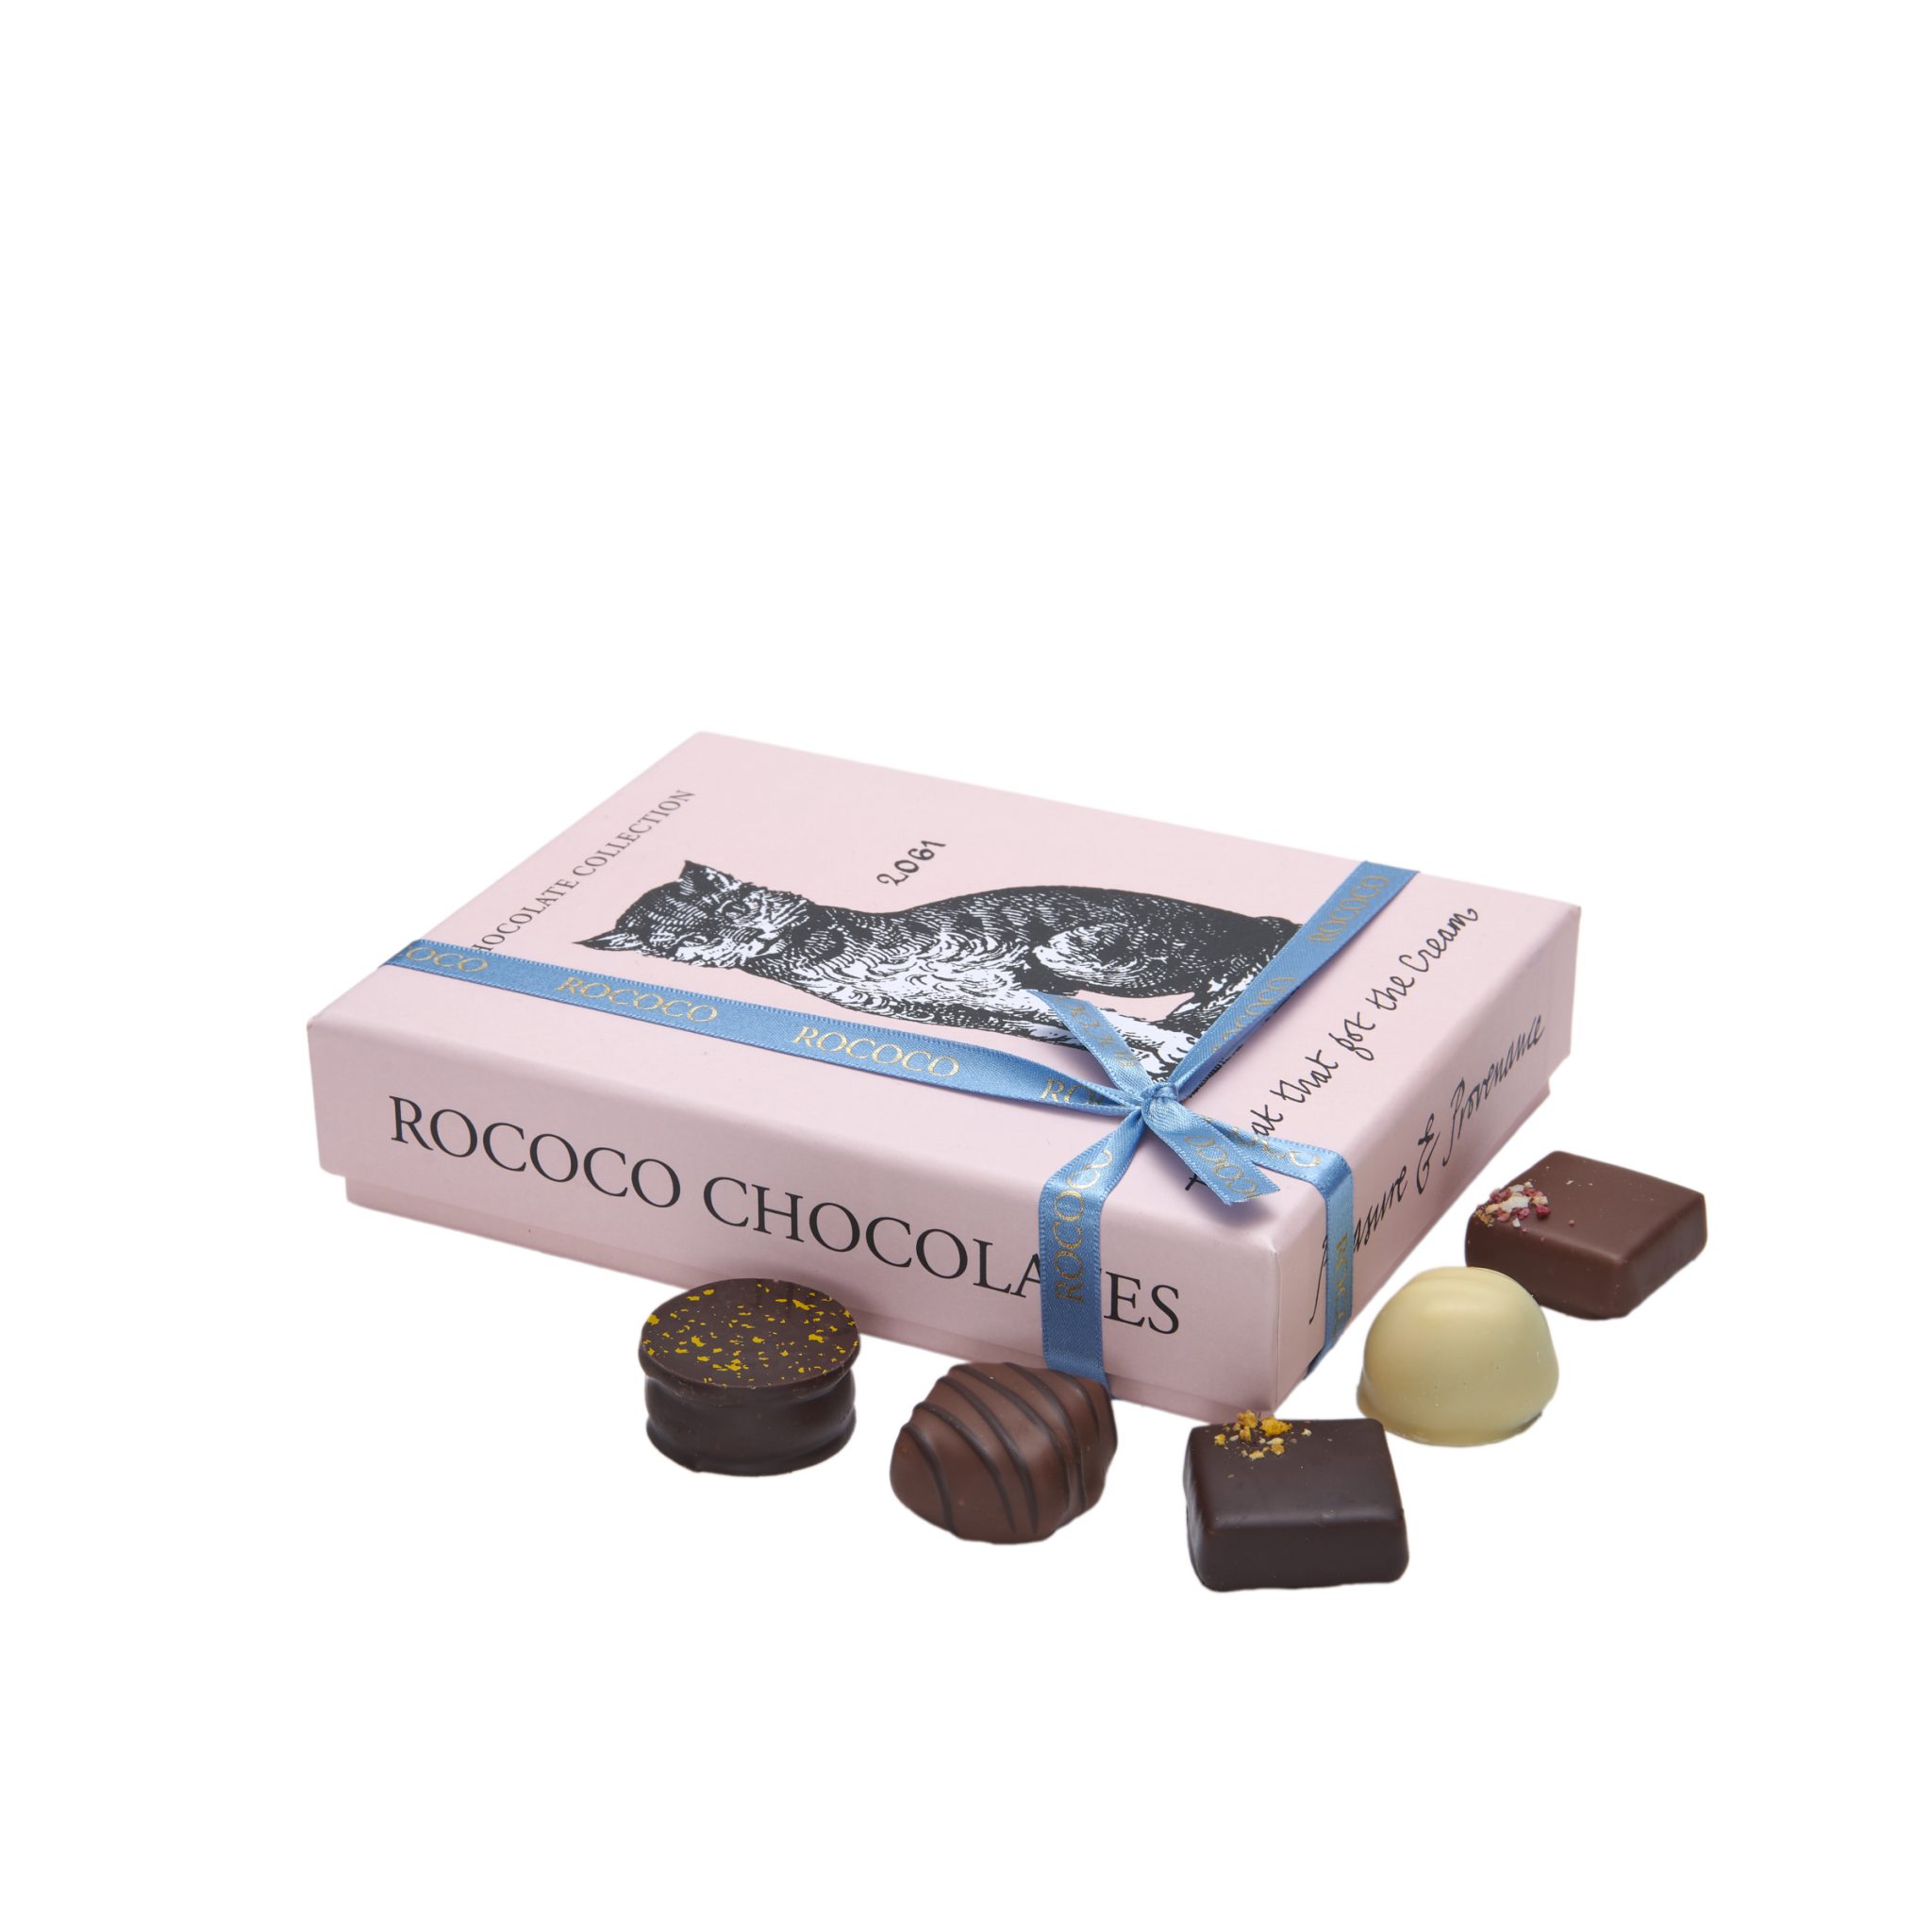 Rococo Chocolates Cat That Got The Cream Chocolate Box